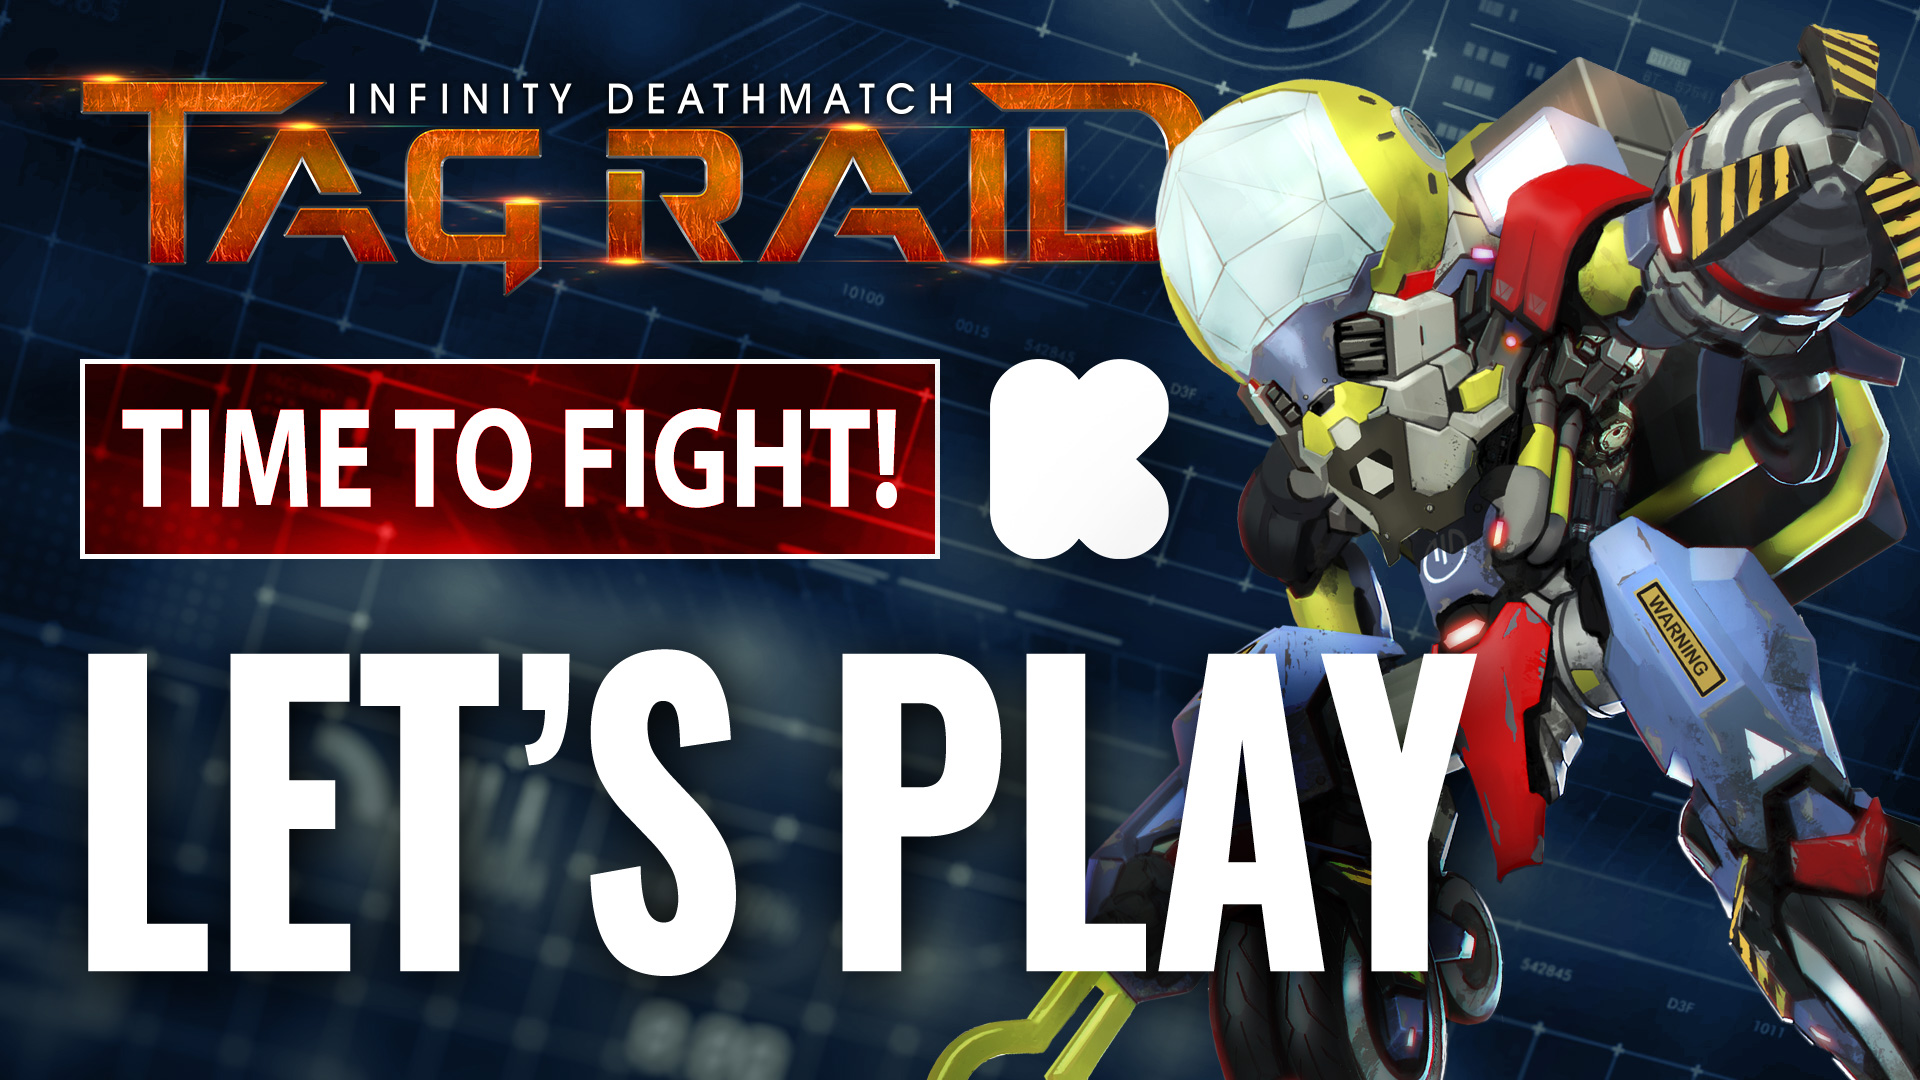 Let's Play! TAG RAID Demo Game Infinity Deathmatch TAG RAID Kickstarter Updated